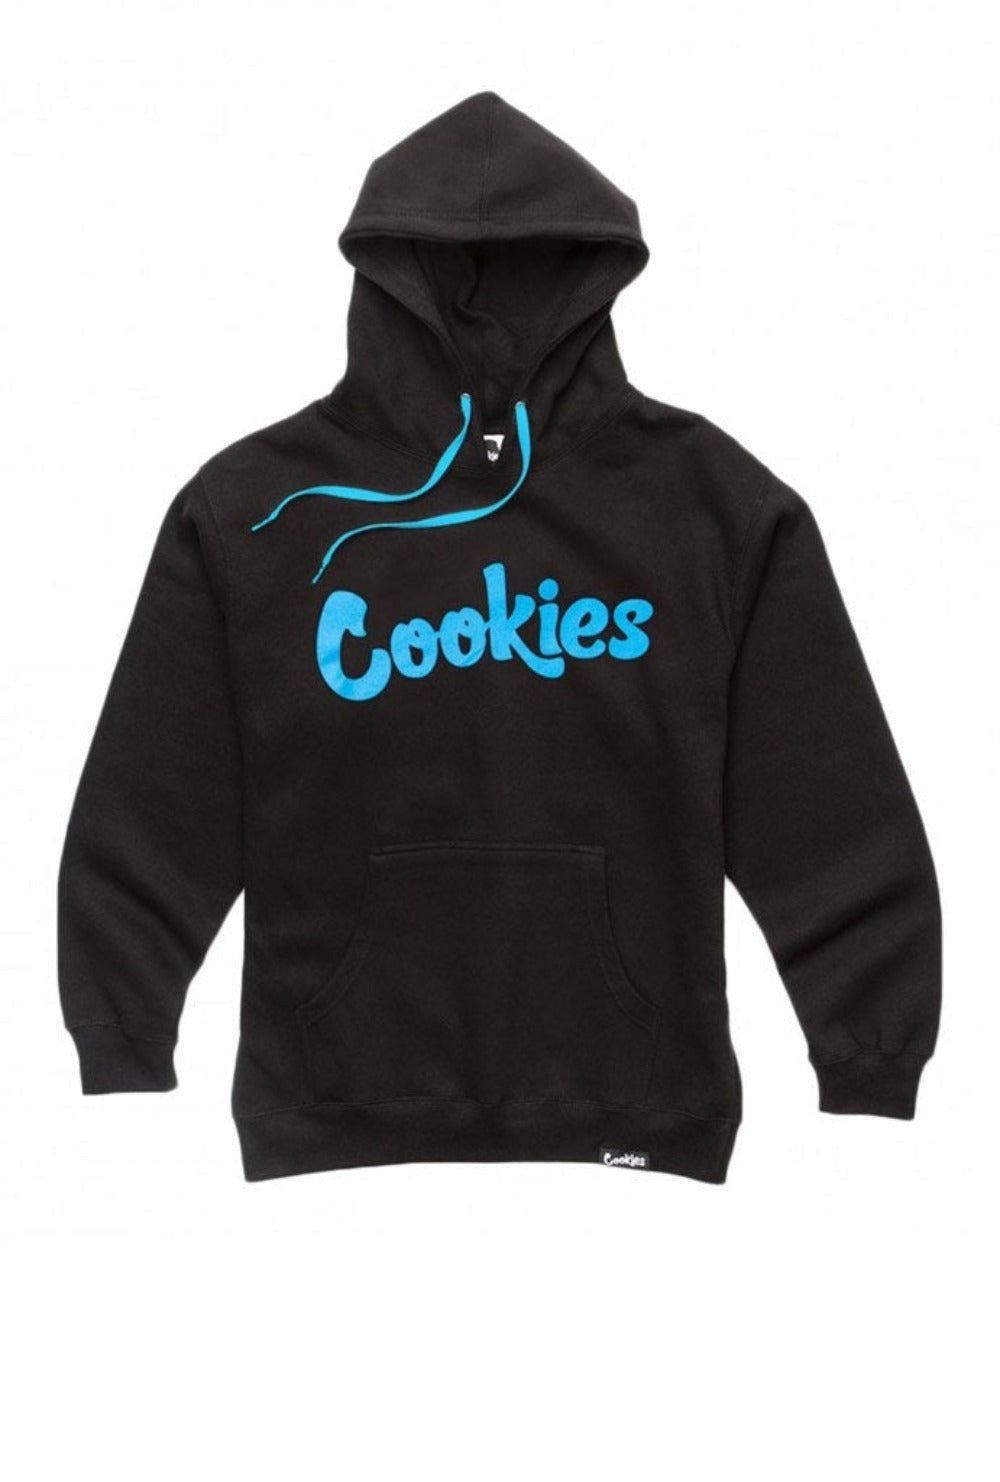 Cookie Original Logo Thin Mint Fleece-Black-Blue